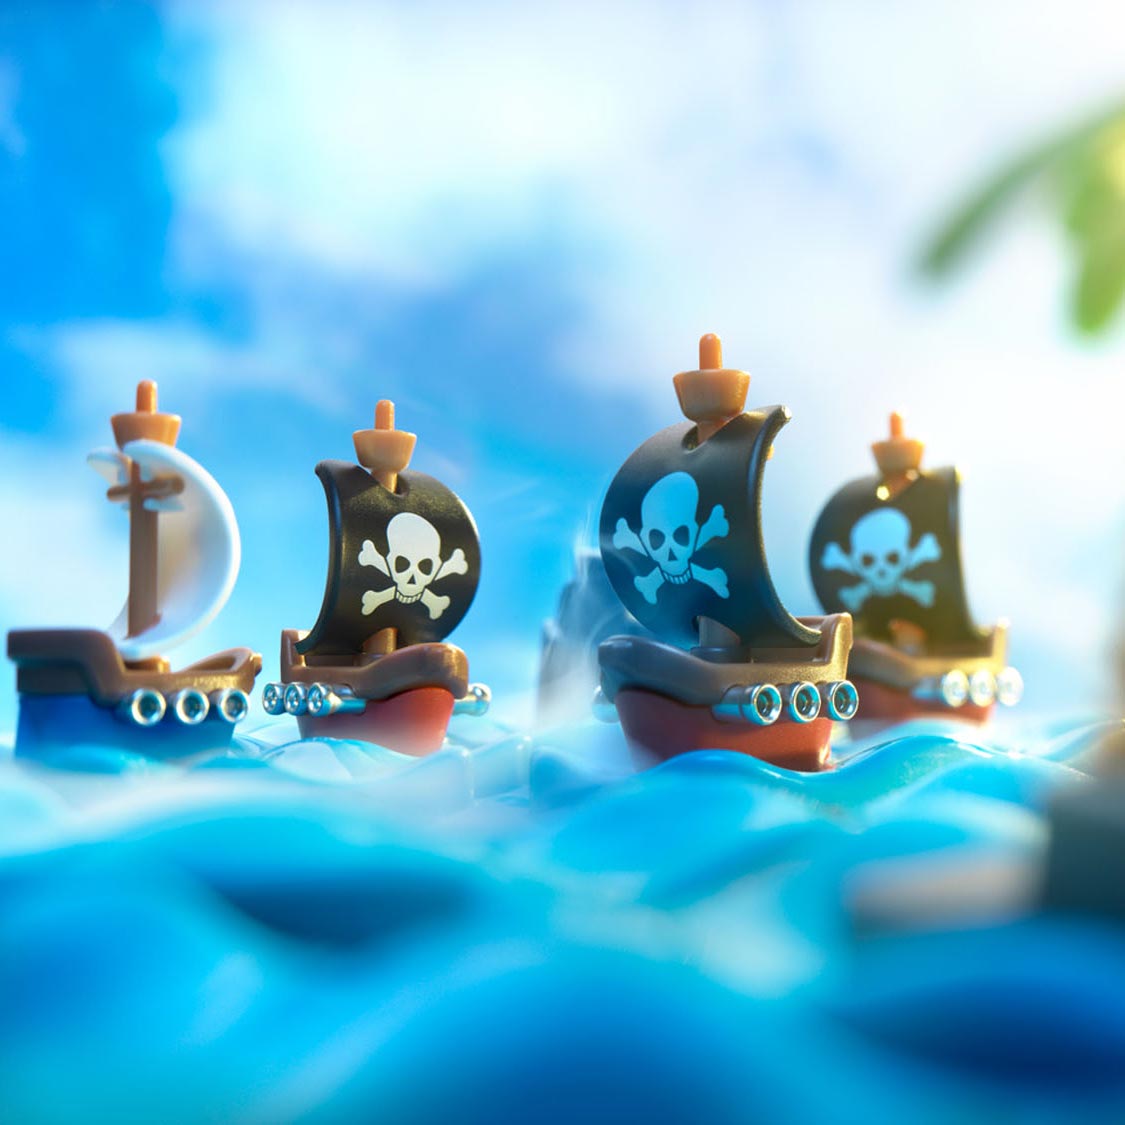 SmartGames Pirates Crossfire